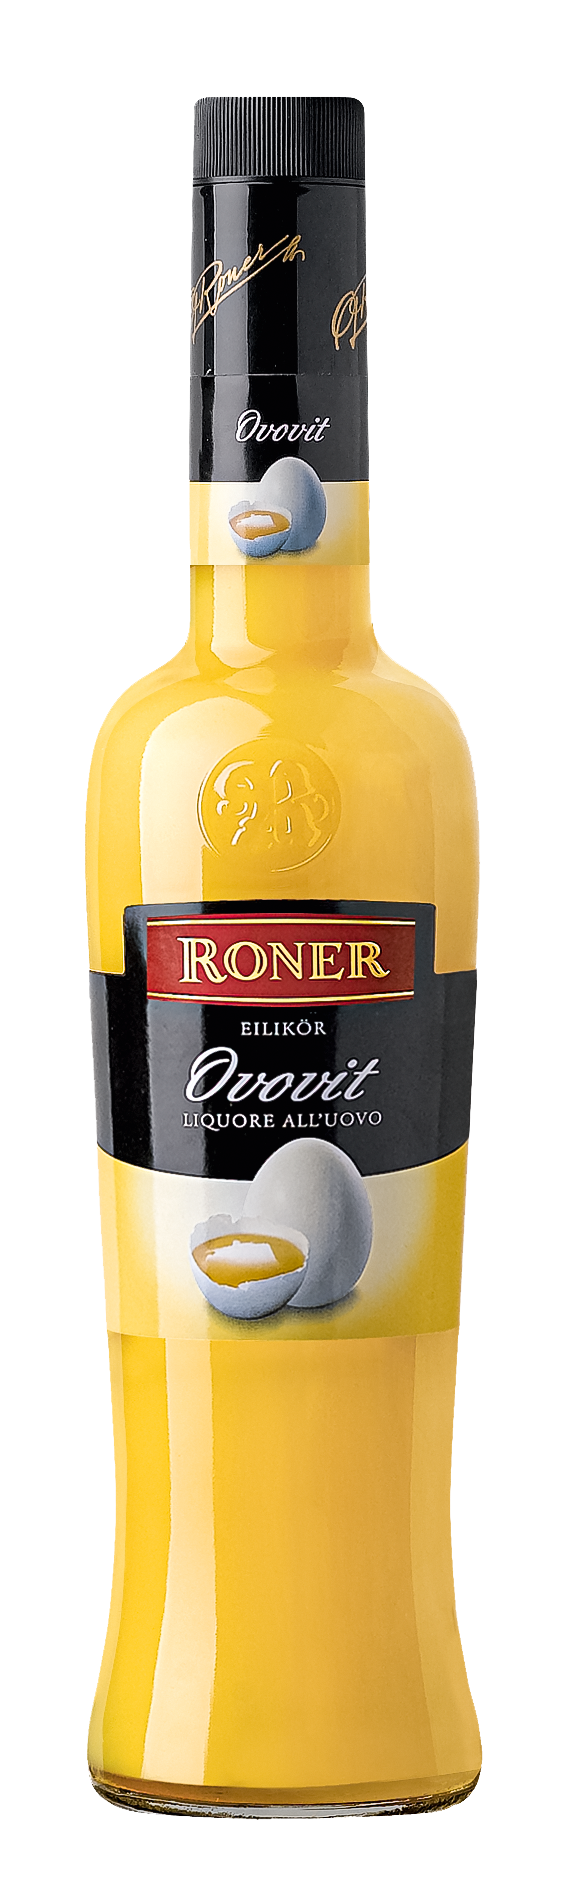 Ovovit - Egg liquor